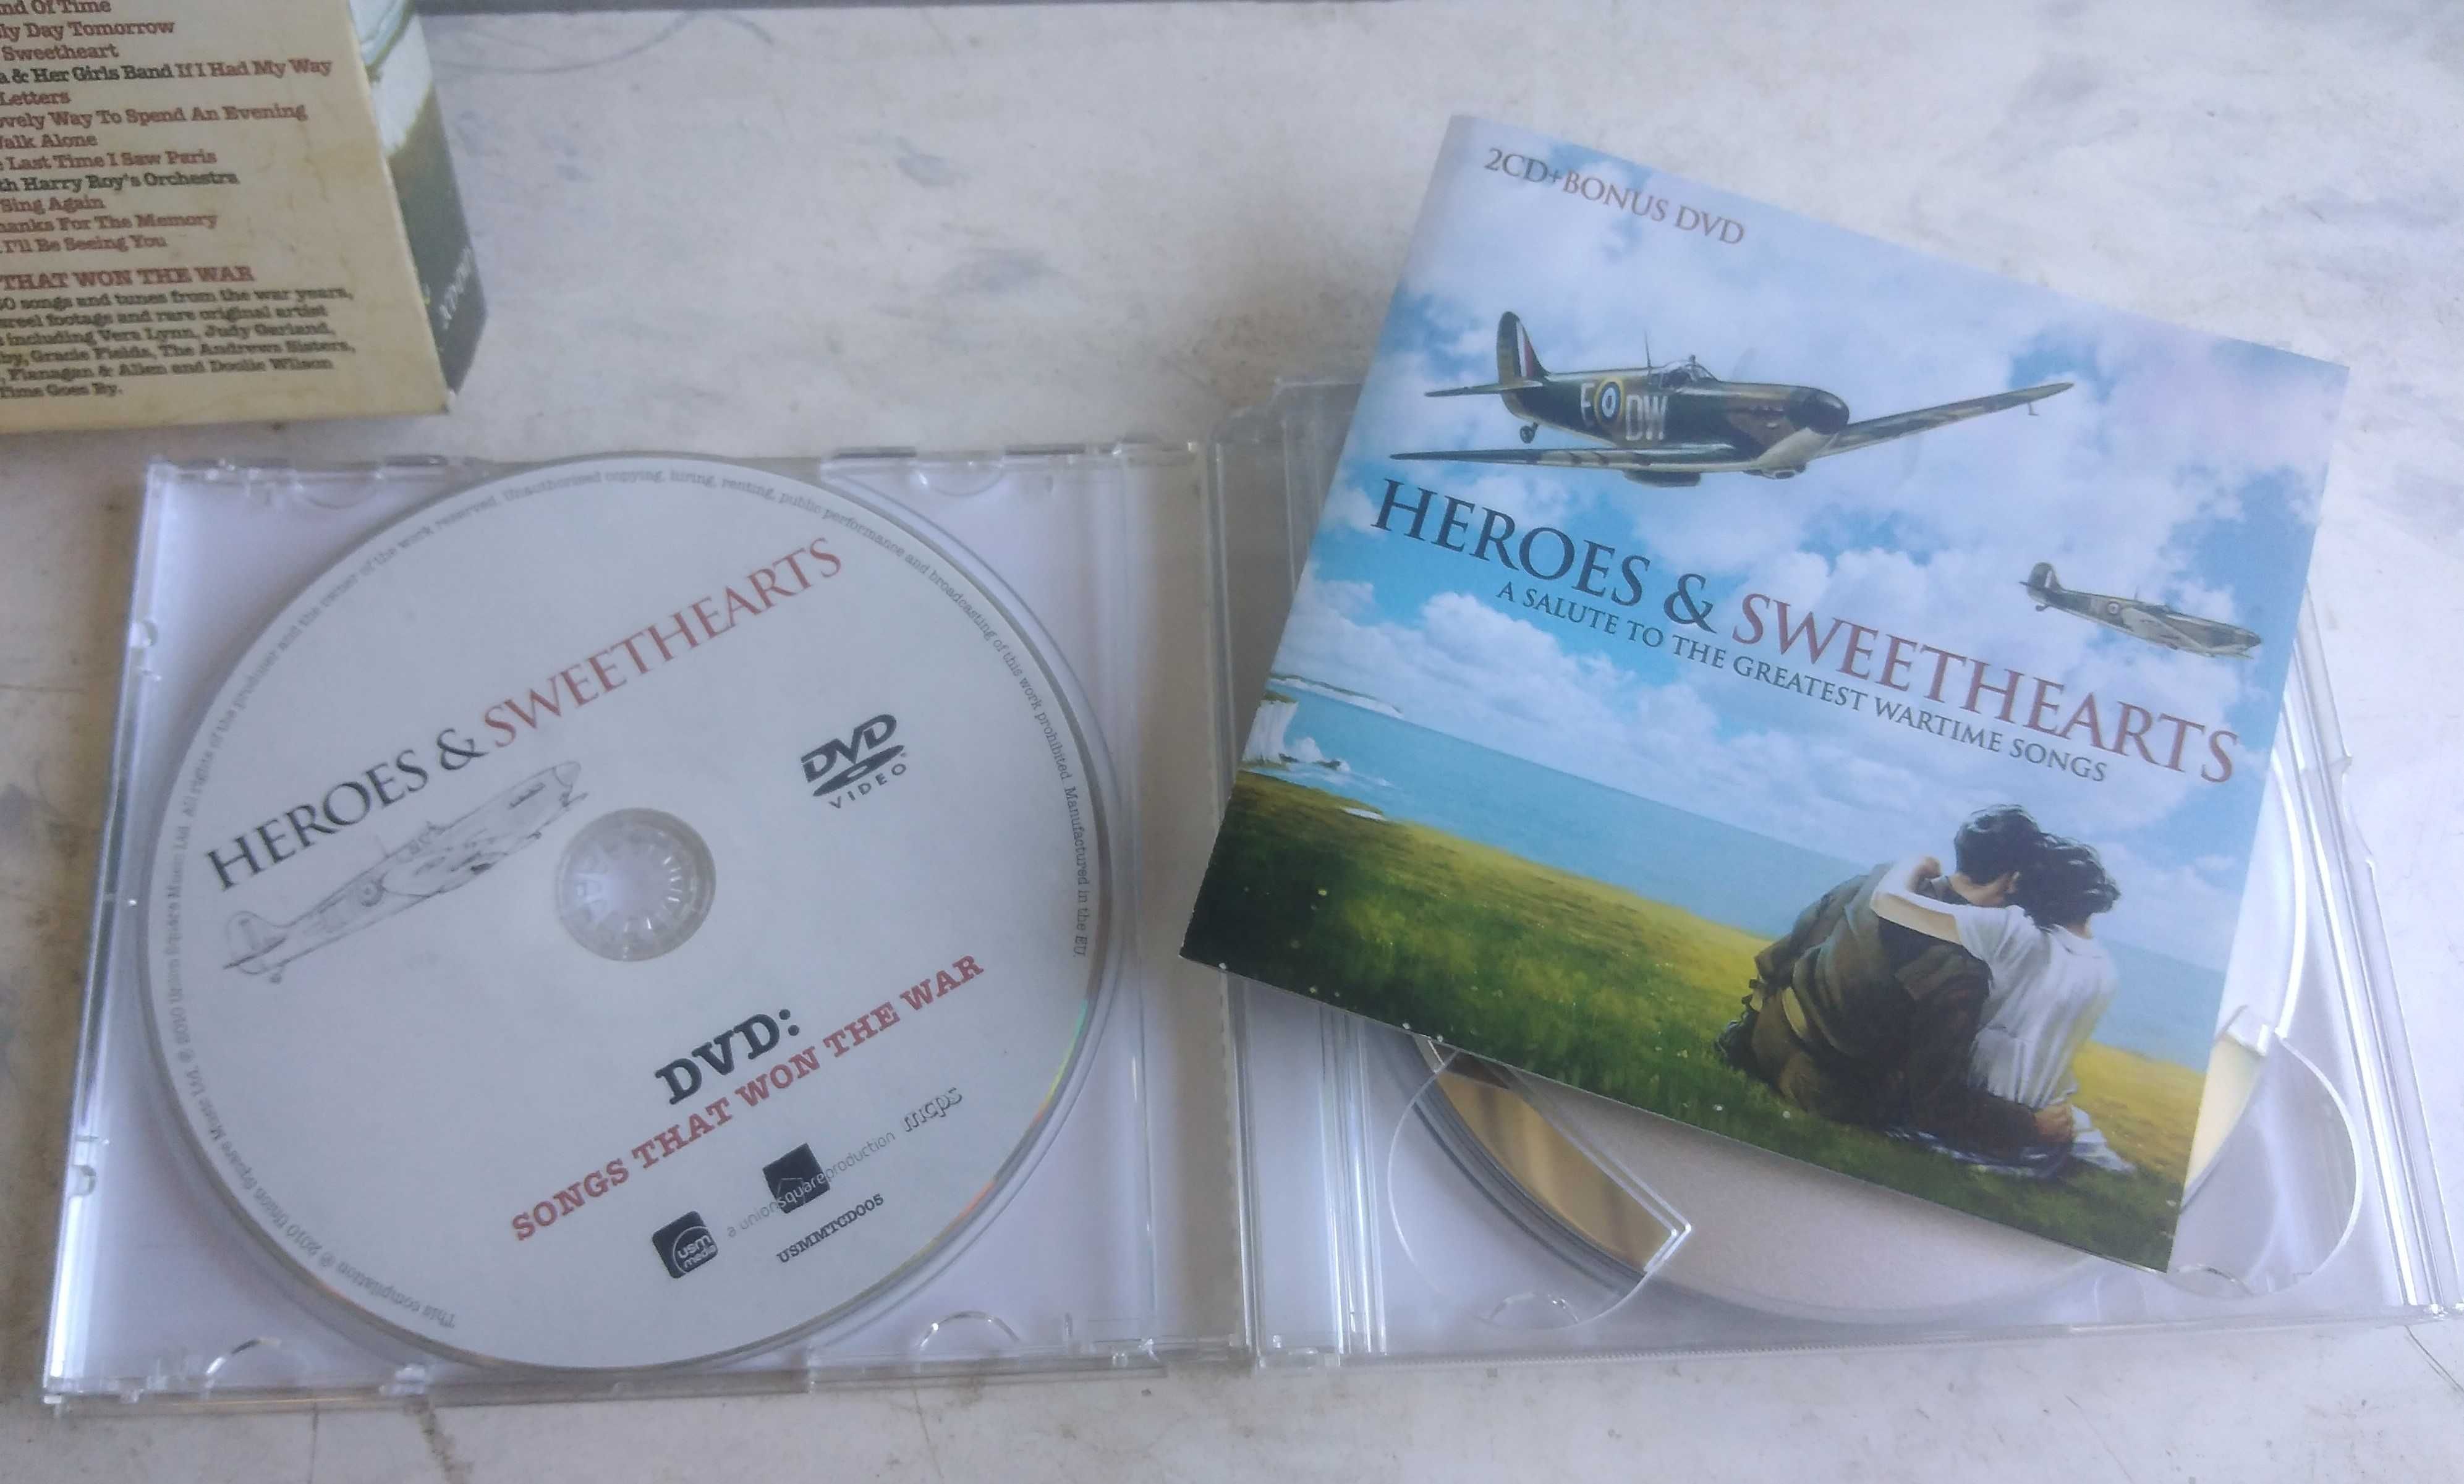 2CD Heroes & sweethearts / legendy XX wiek